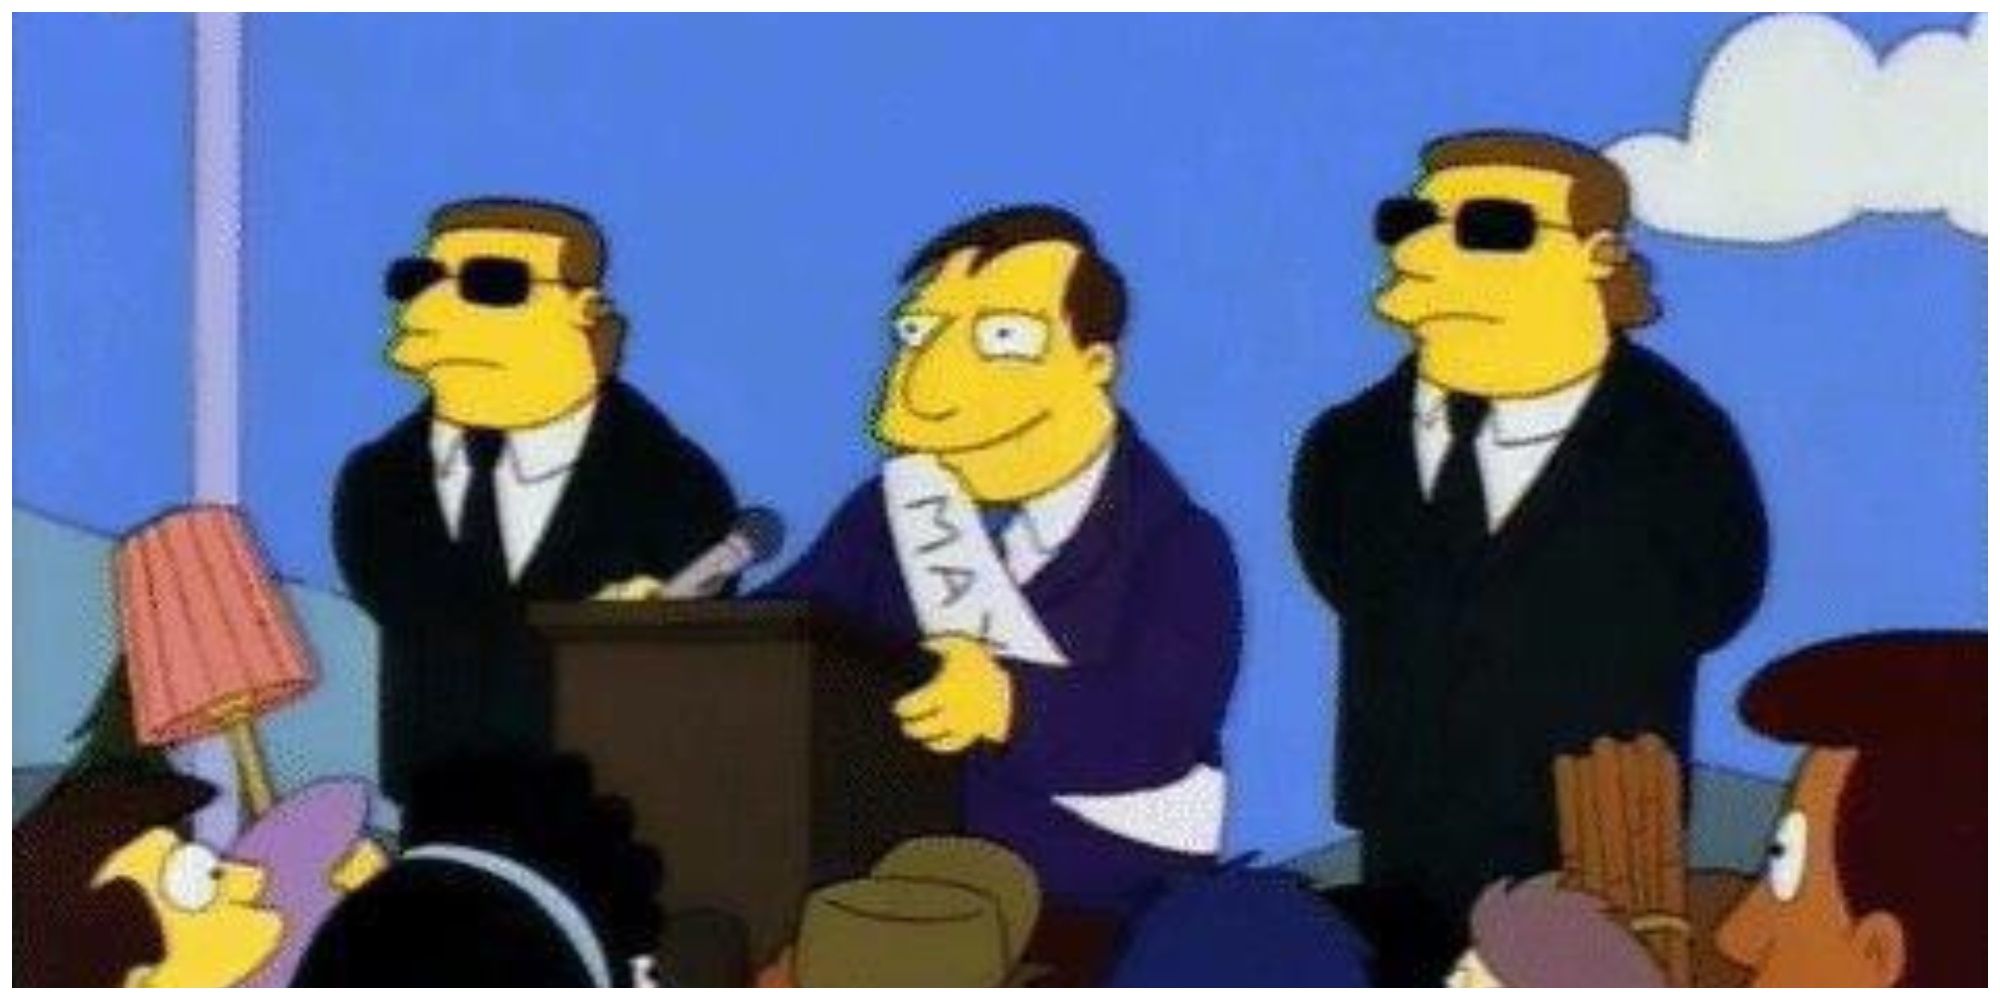 Simpsons Mayor Quimby